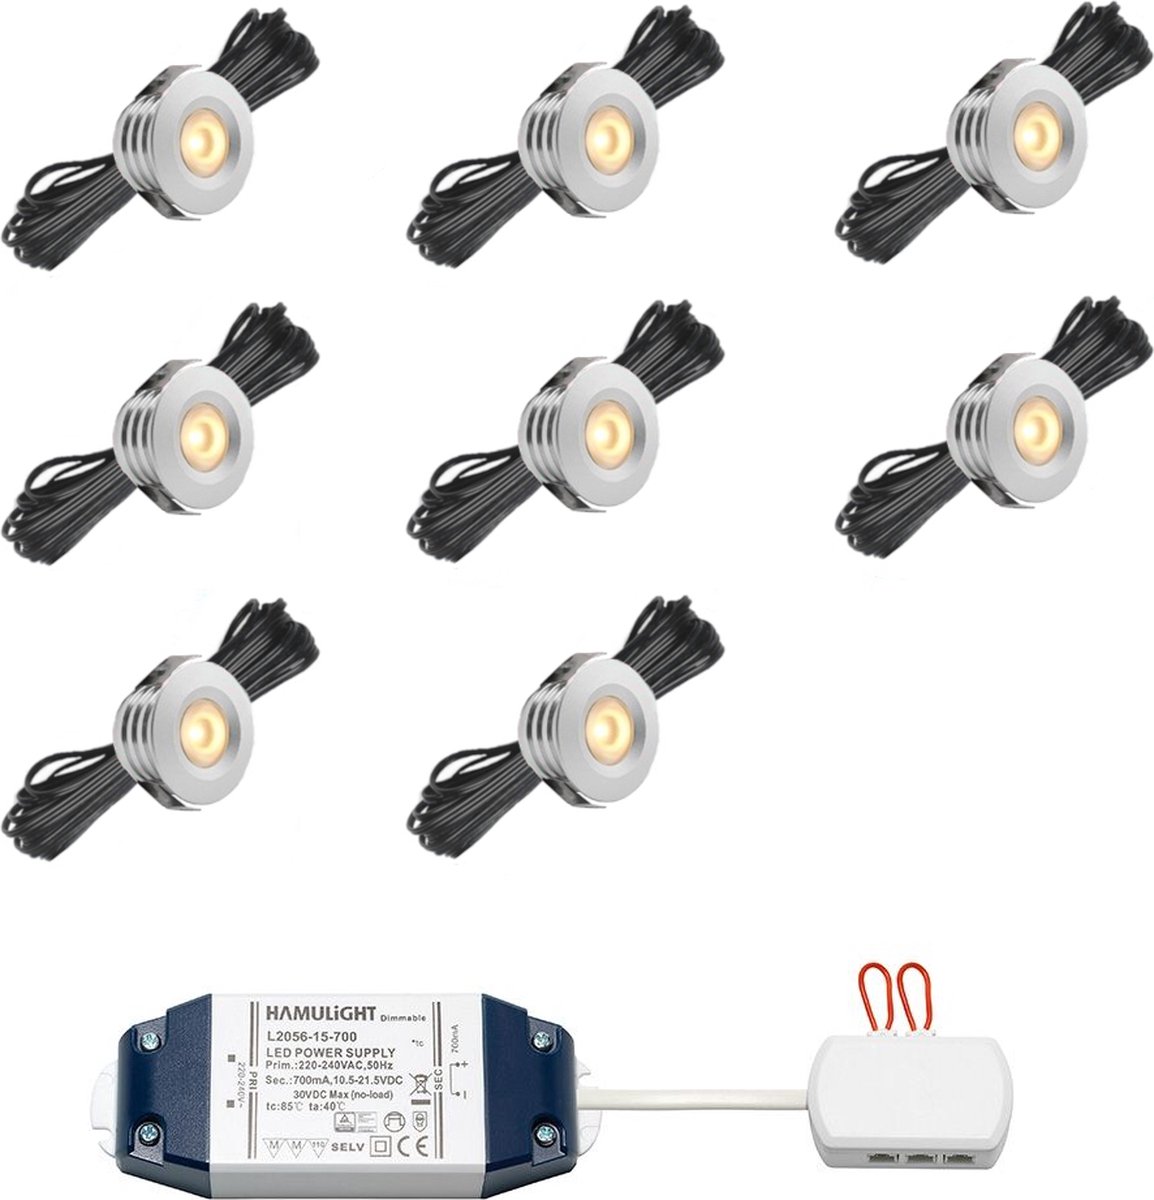 LED inbouwspot Pals bas inclusief trafo - inbouwspots / downlights / plafondspots / led spot / 3W / dimbaar / warm wit / rond / 230V / IP44 / - set van 8 stuks